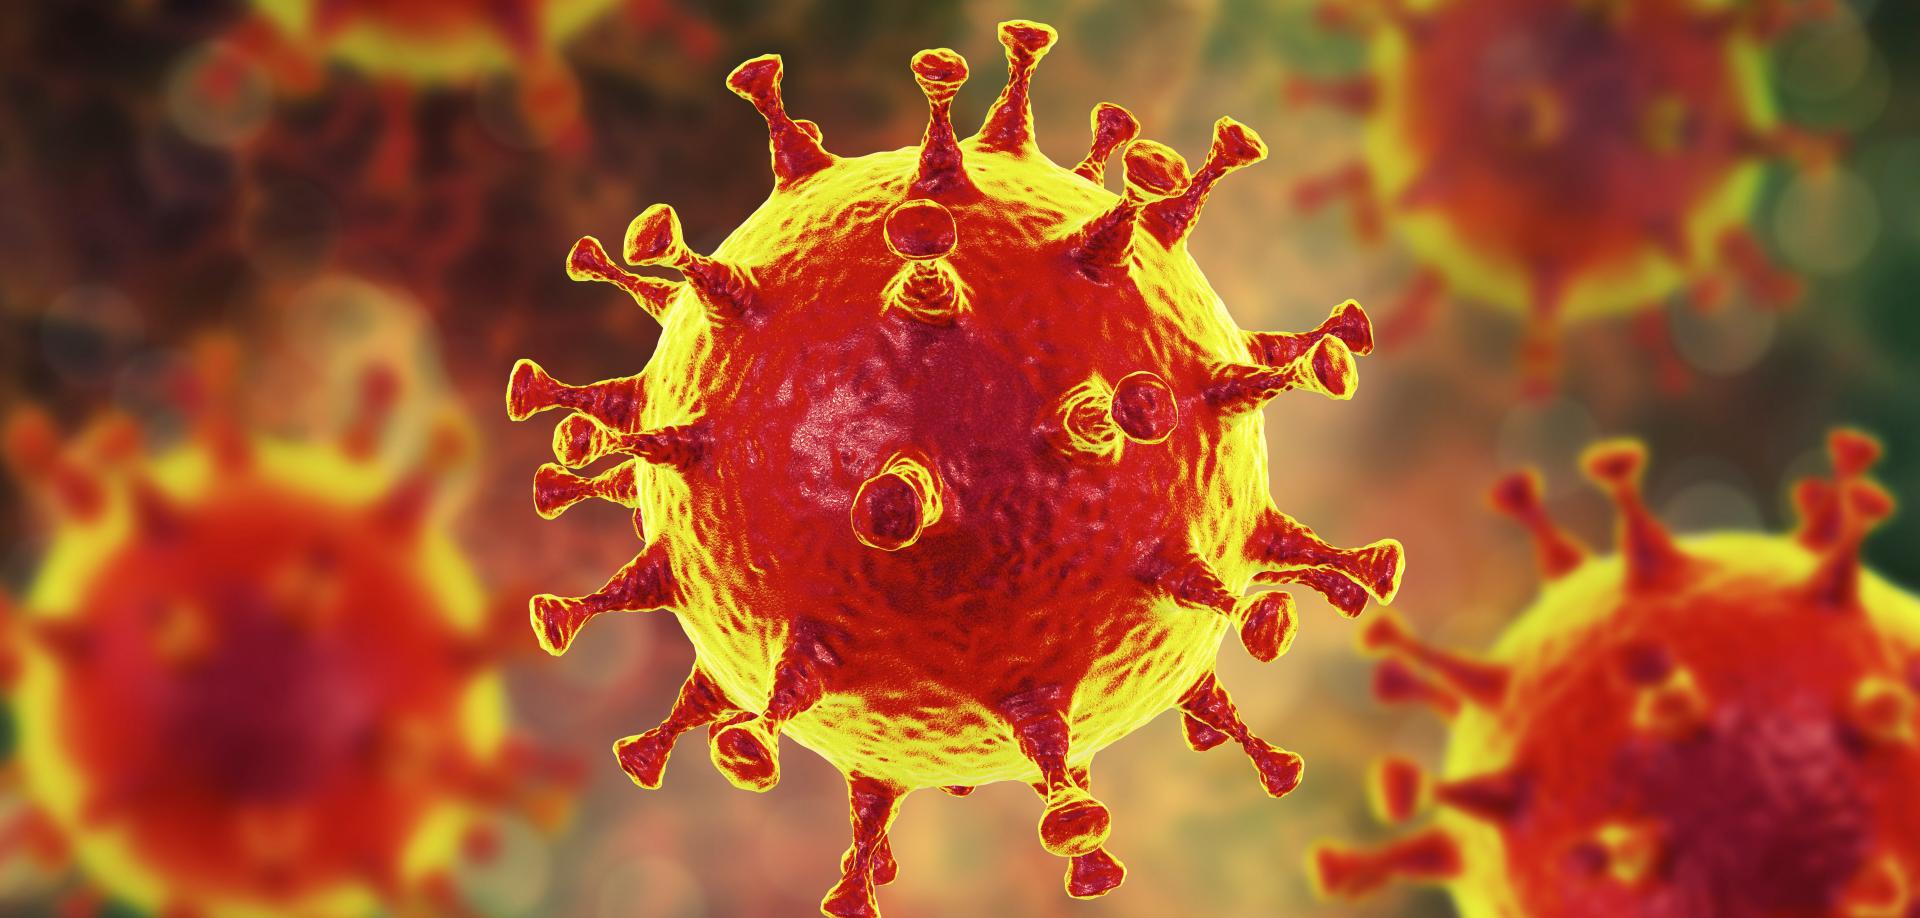 56 нови случая на коронавирус у нас, общият им брой е 1290